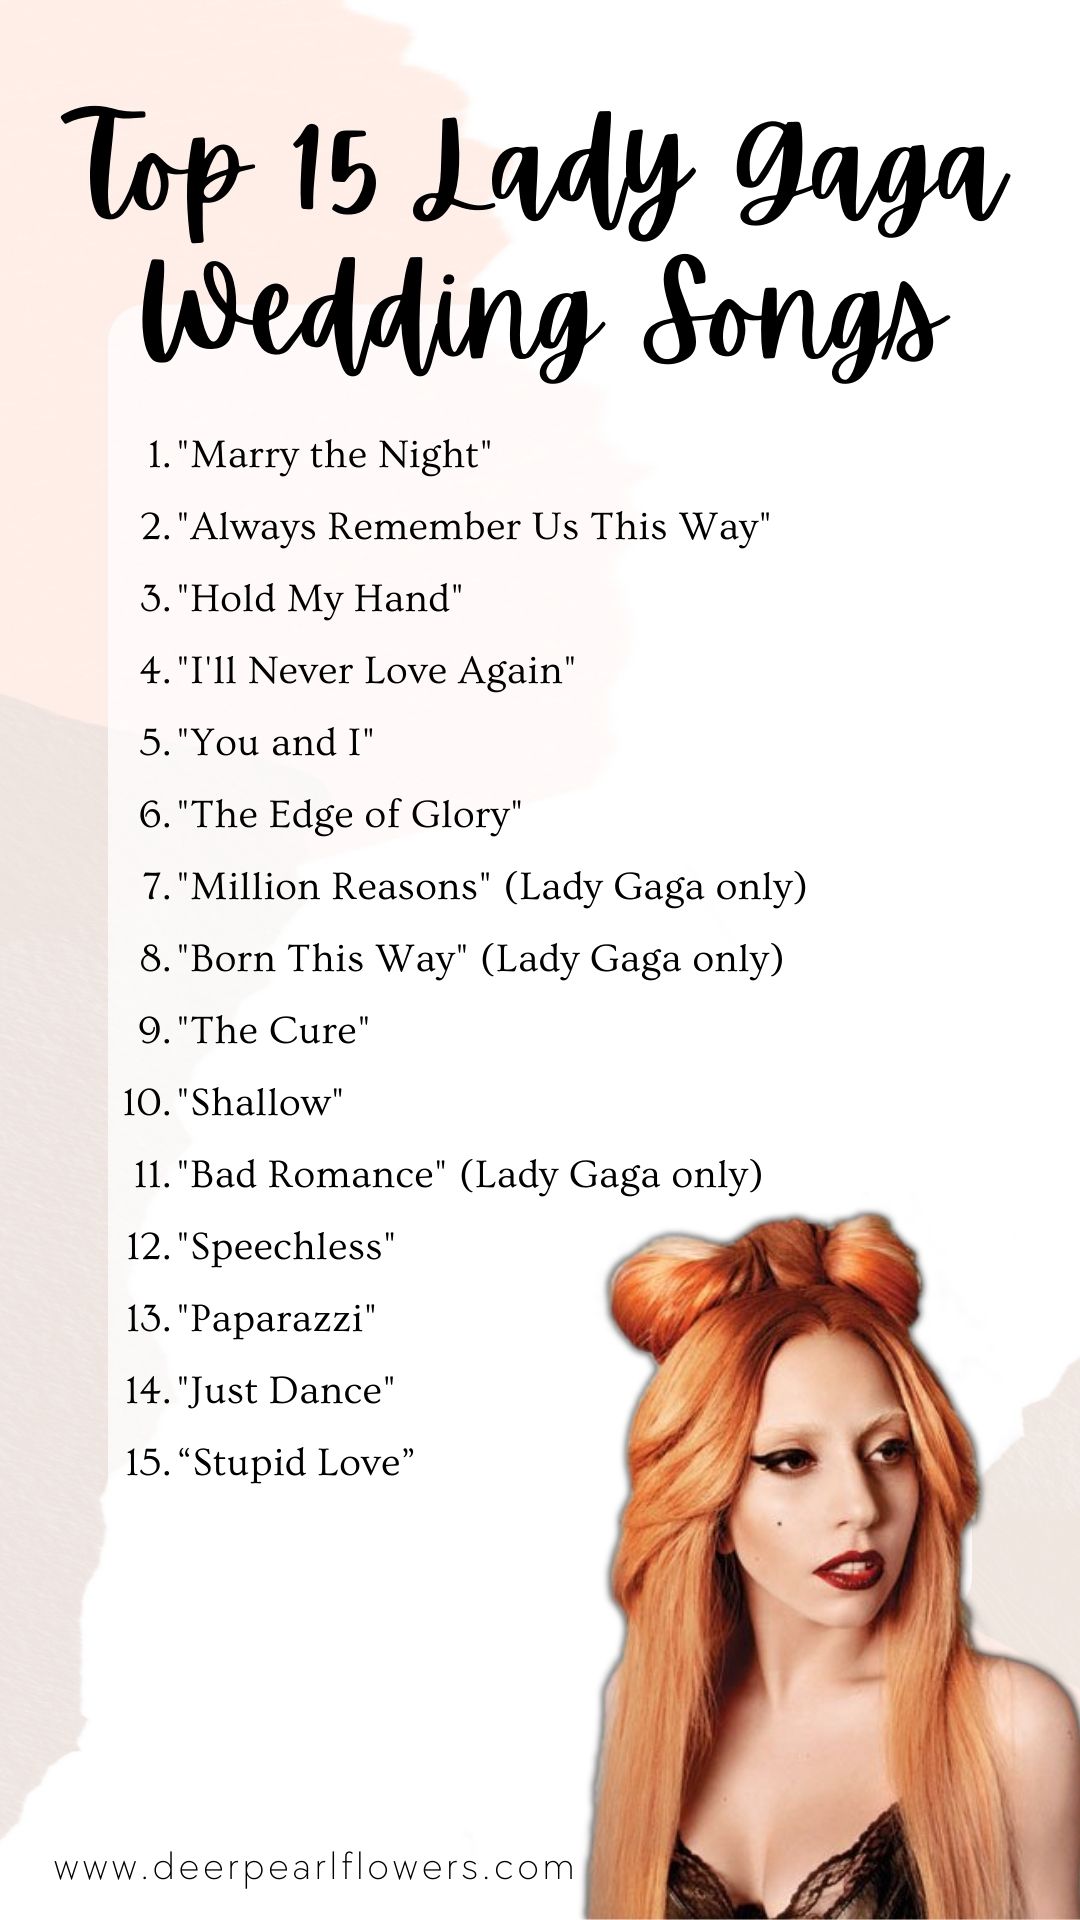 Top 15 Lady Gaga Wedding Songs